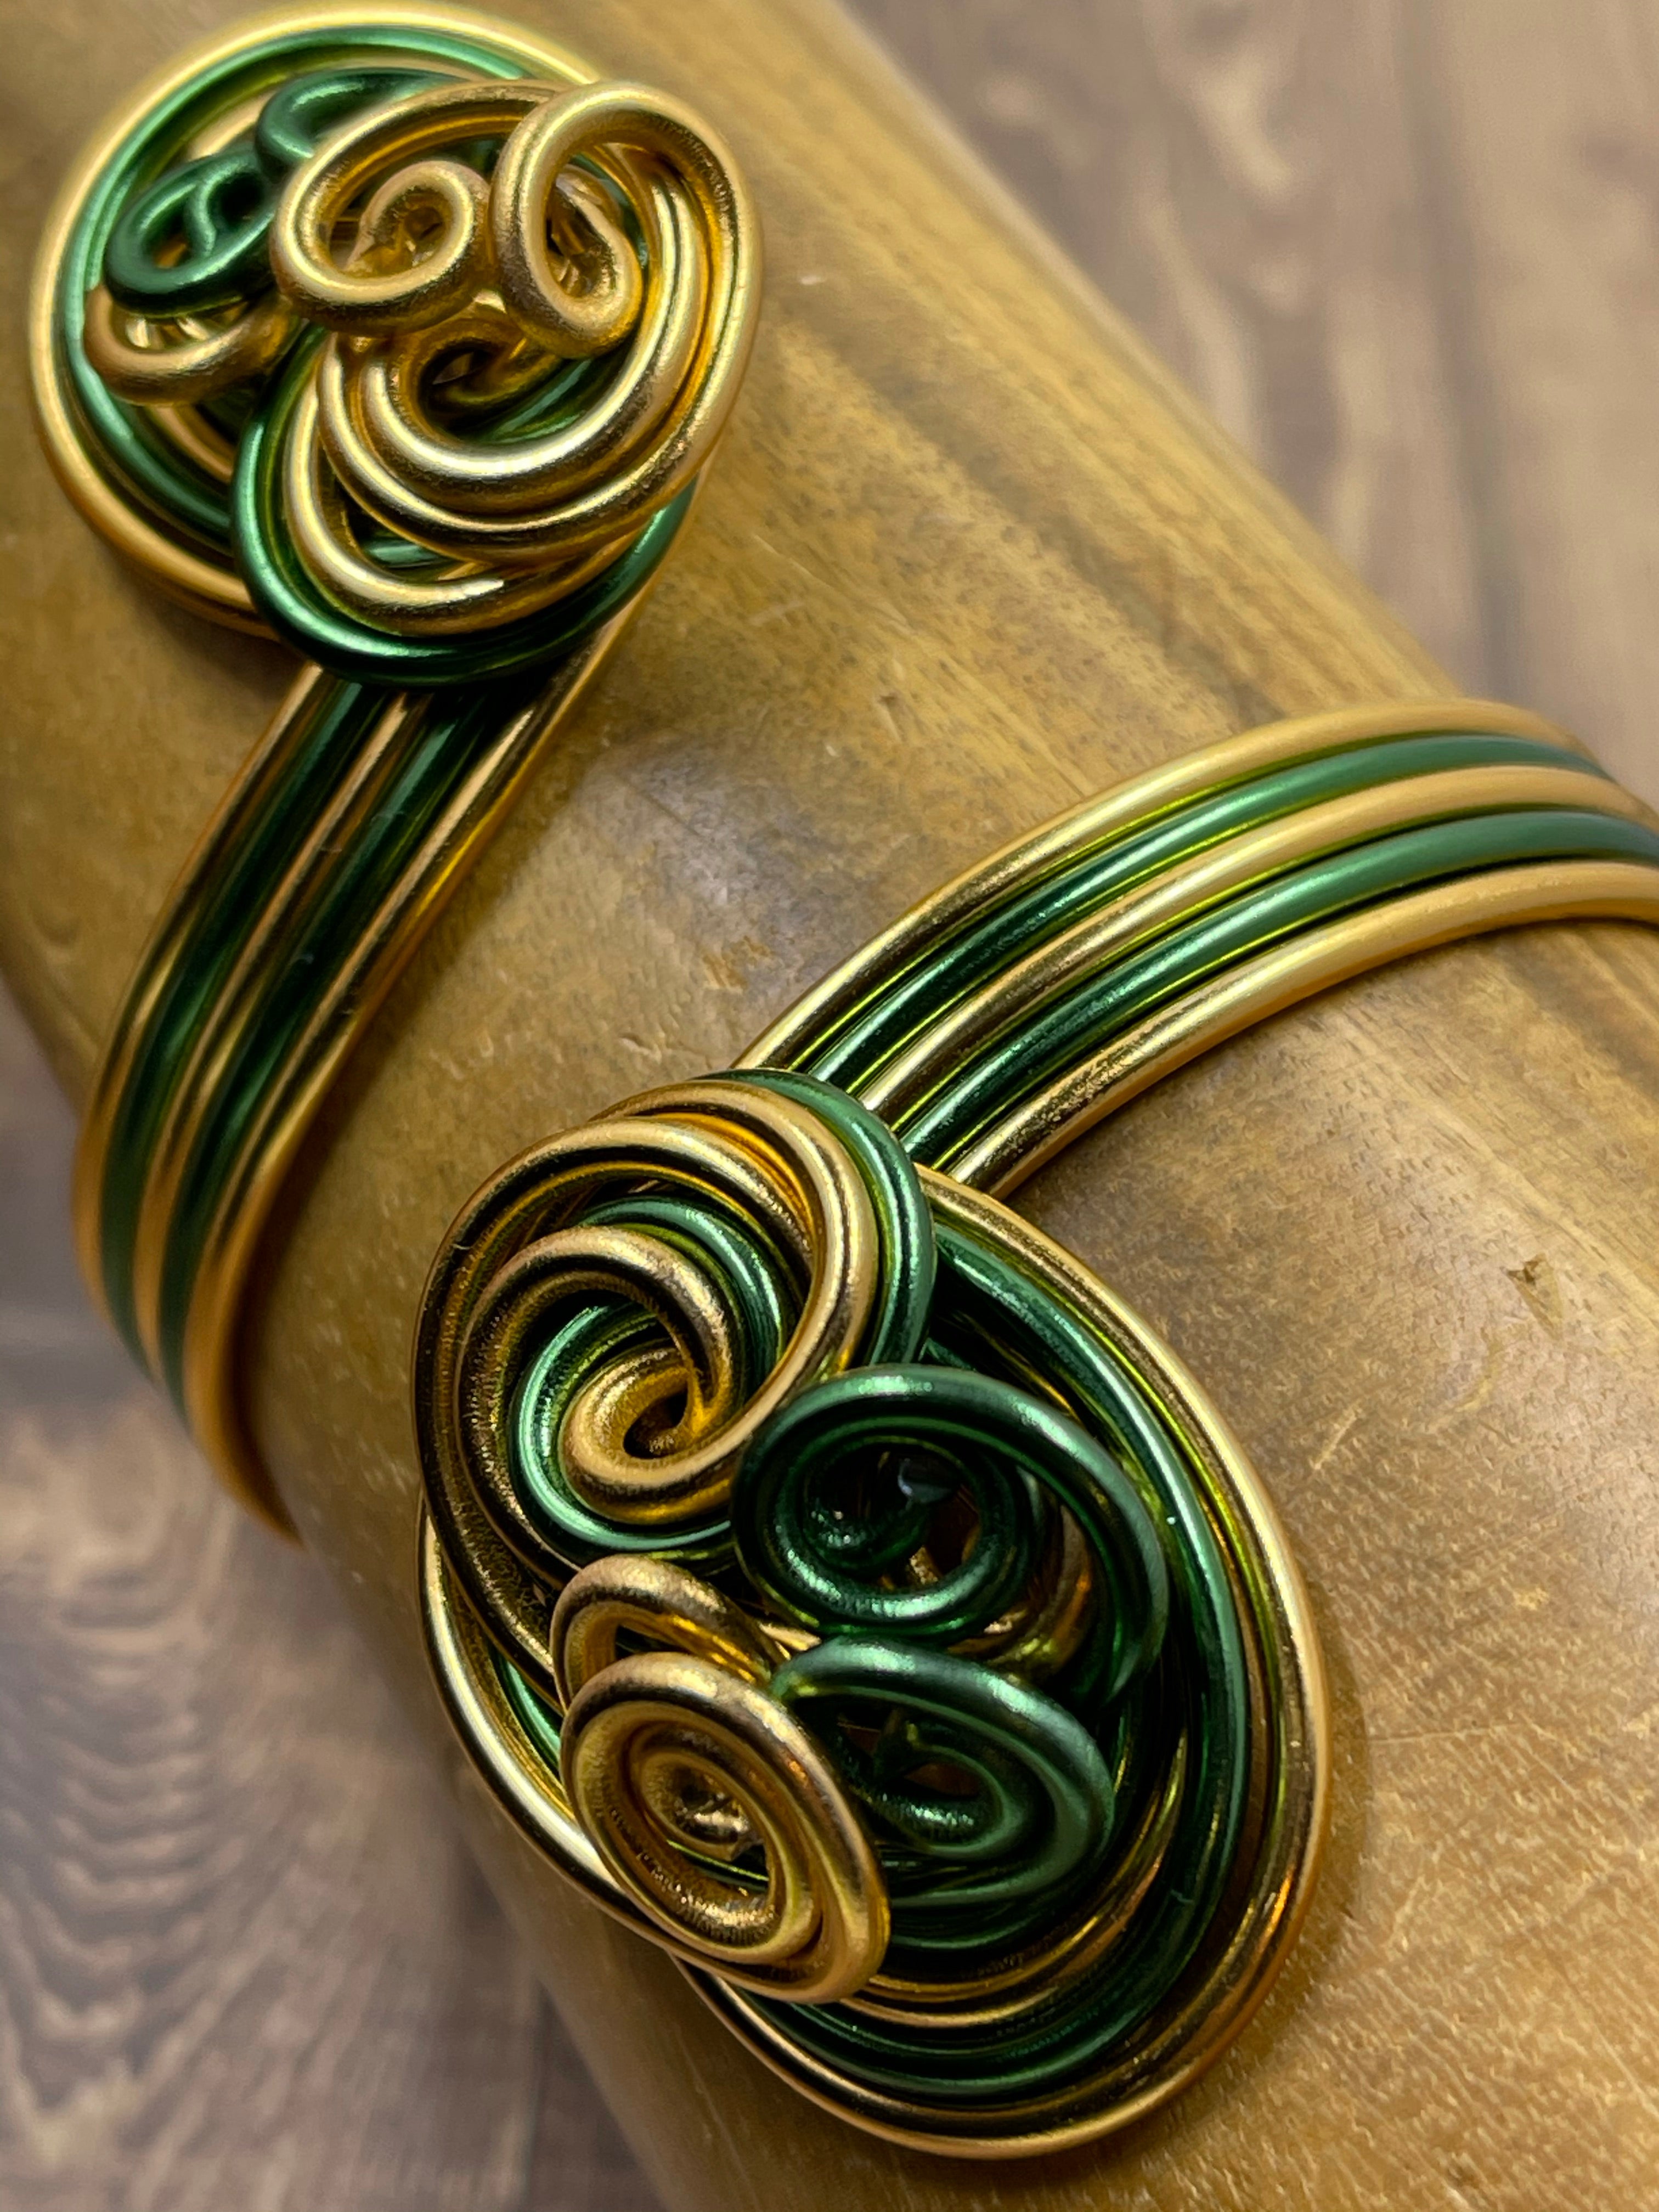 Chi Eta Phi inspired Green and Gold Cuff Bracelet